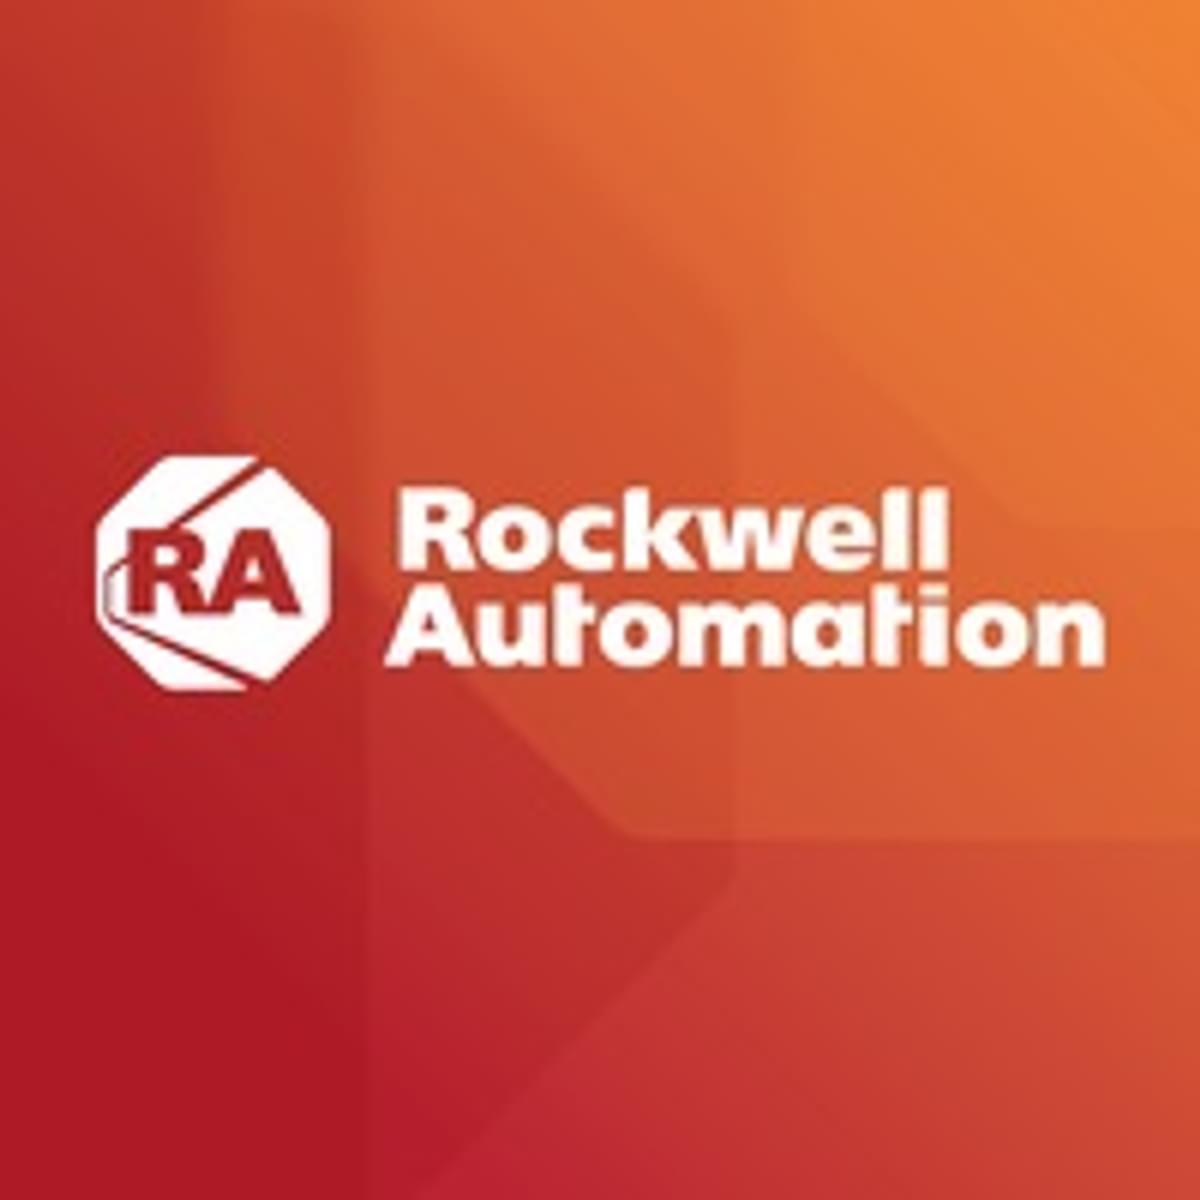 Cyril Perducat benoemd tot nieuwe CTO van Rockwell Automation image